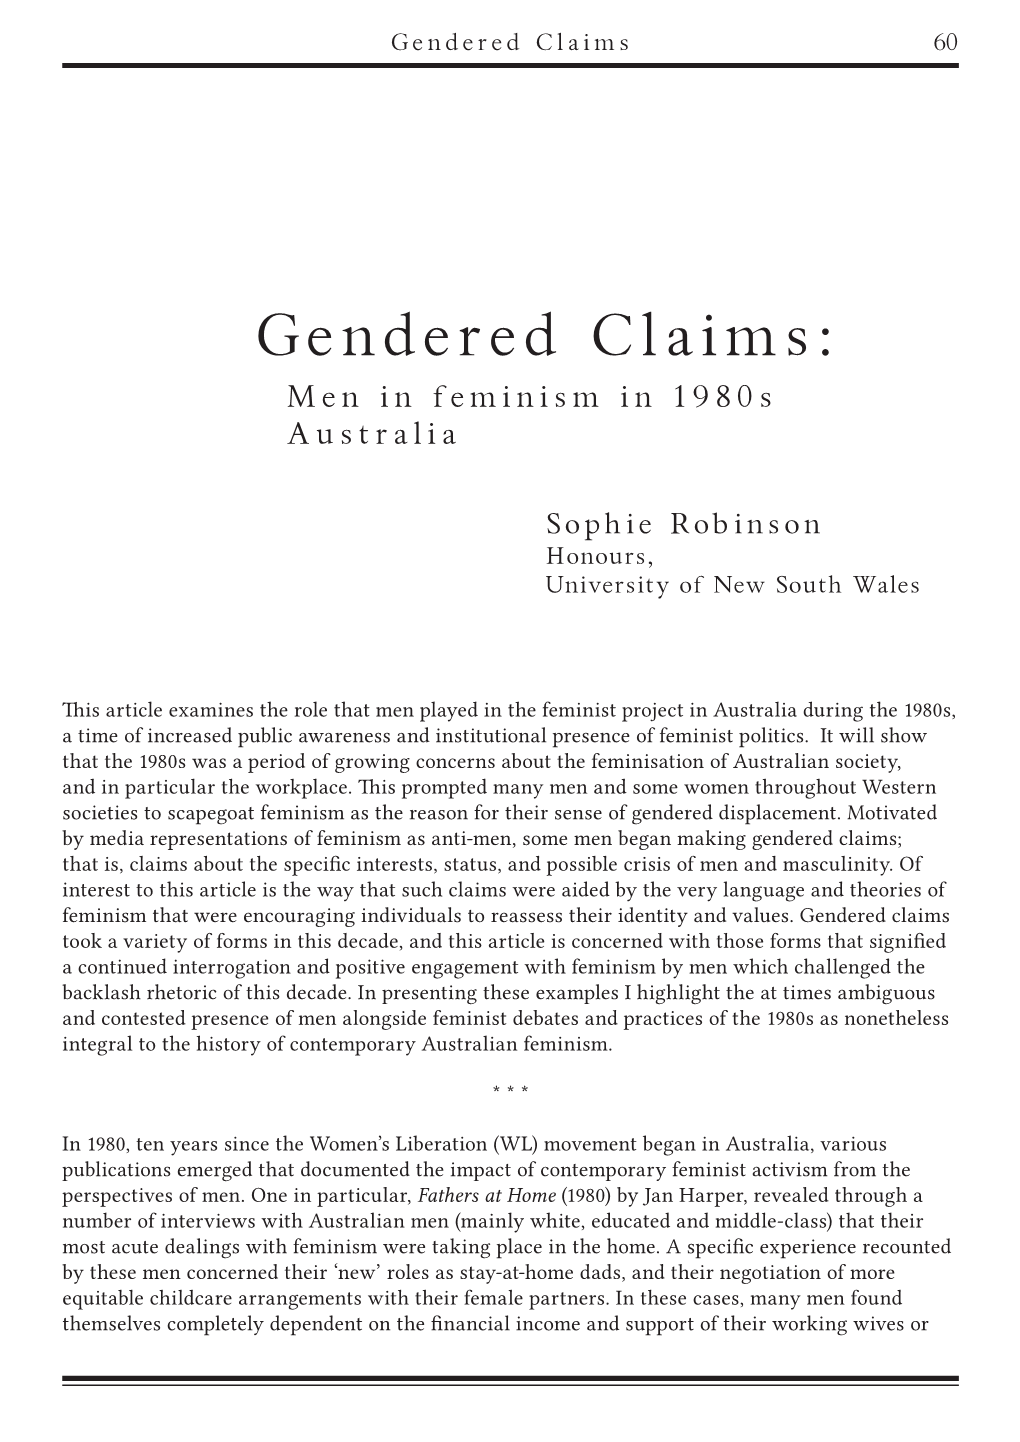 Gendered Claims: Men in Feminism in 1980S Australia